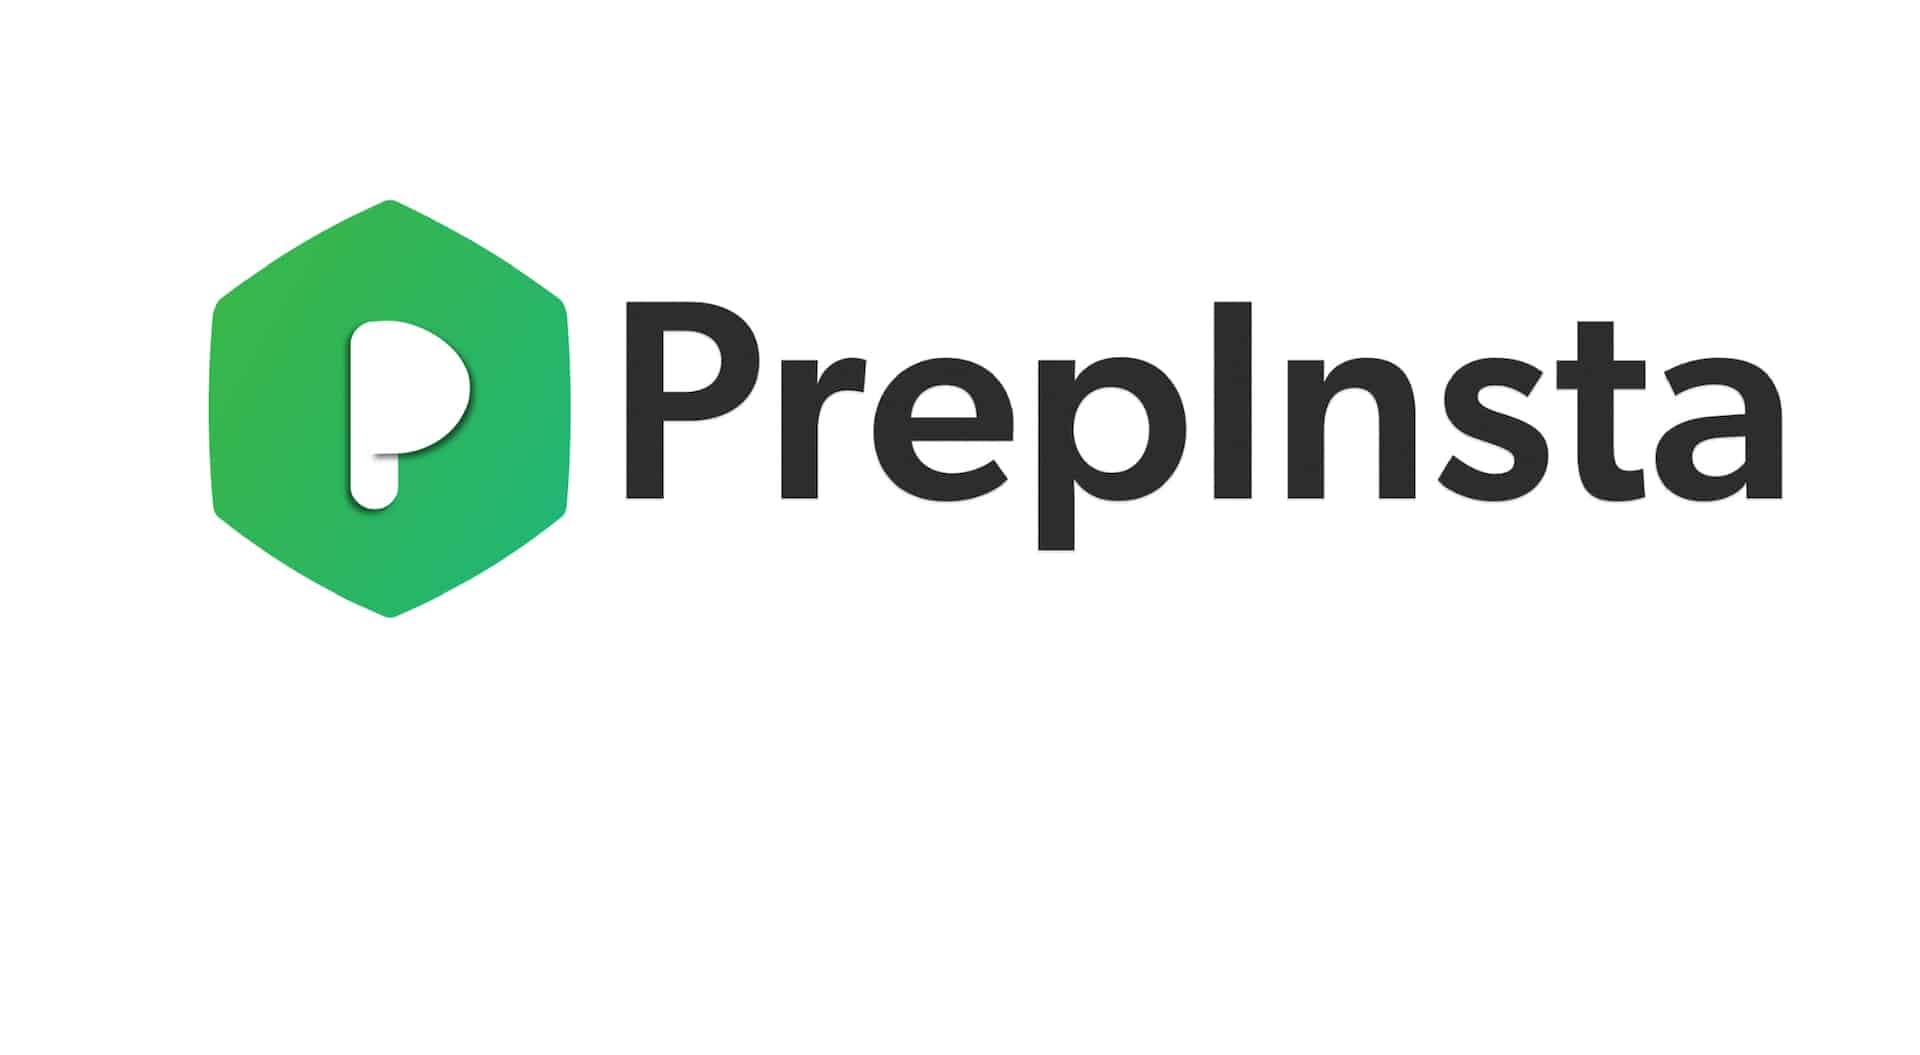 PrepInsta along with WeCP announces PrepSAT, its first-ever Jobathon- hiring Hackathon